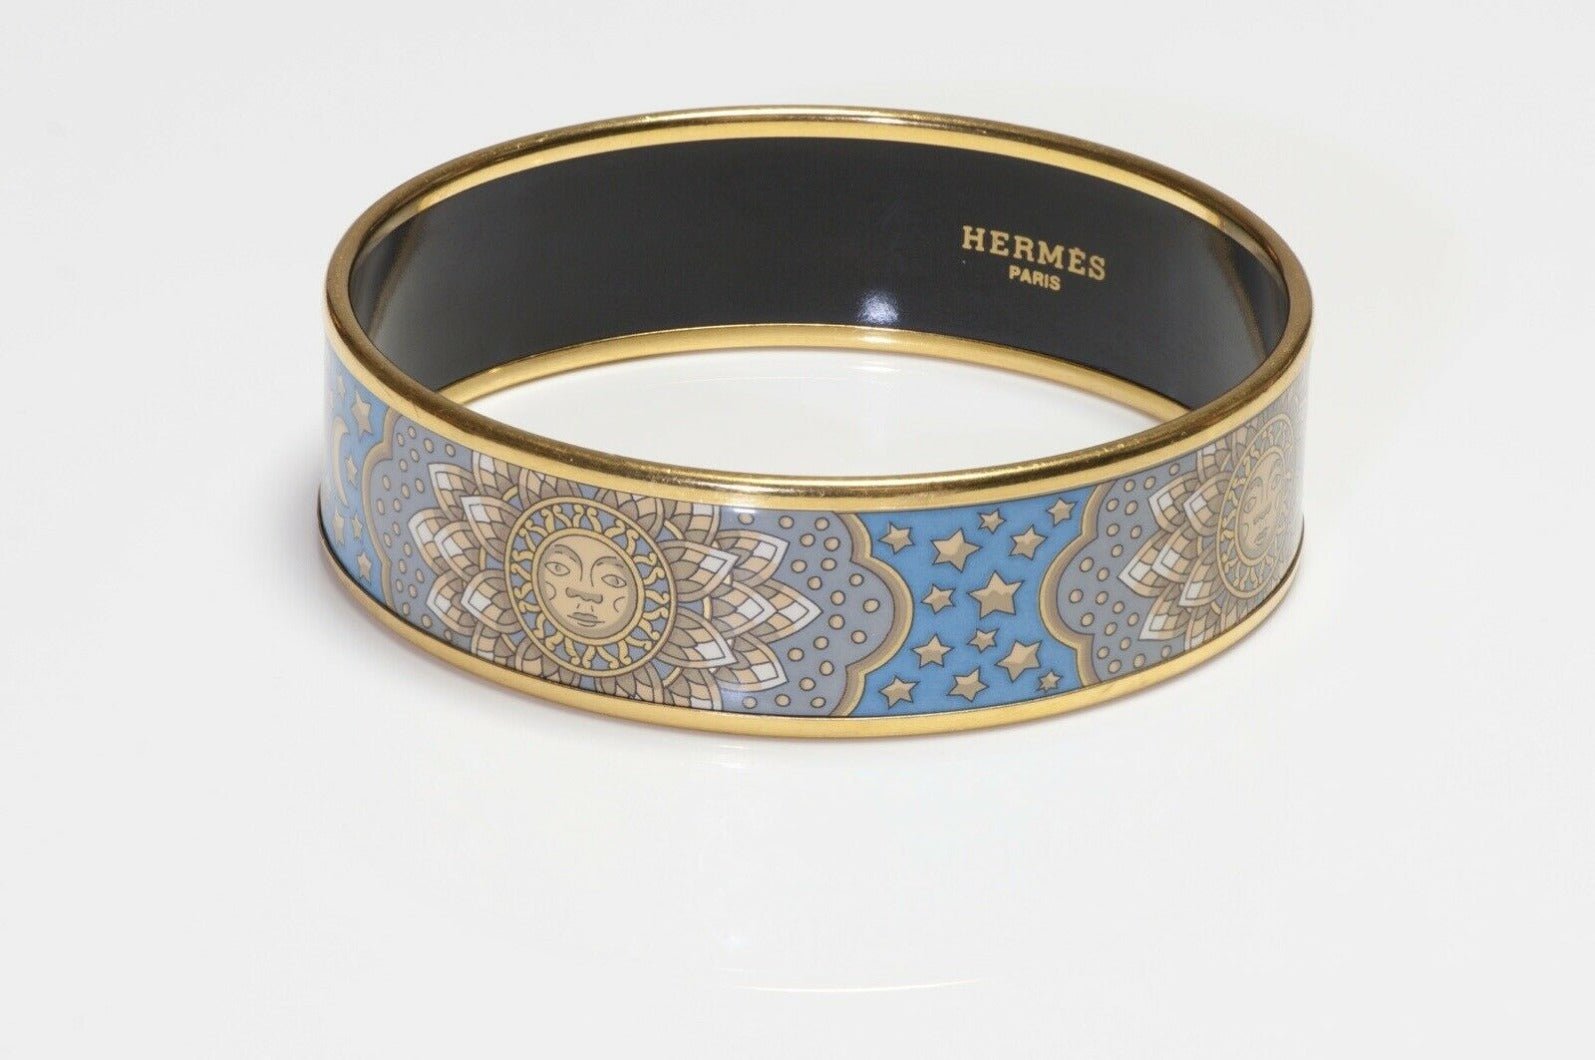 HERMES Paris “Carpe Diem” Sun Moon Blue Enamel Bangle Bracelet